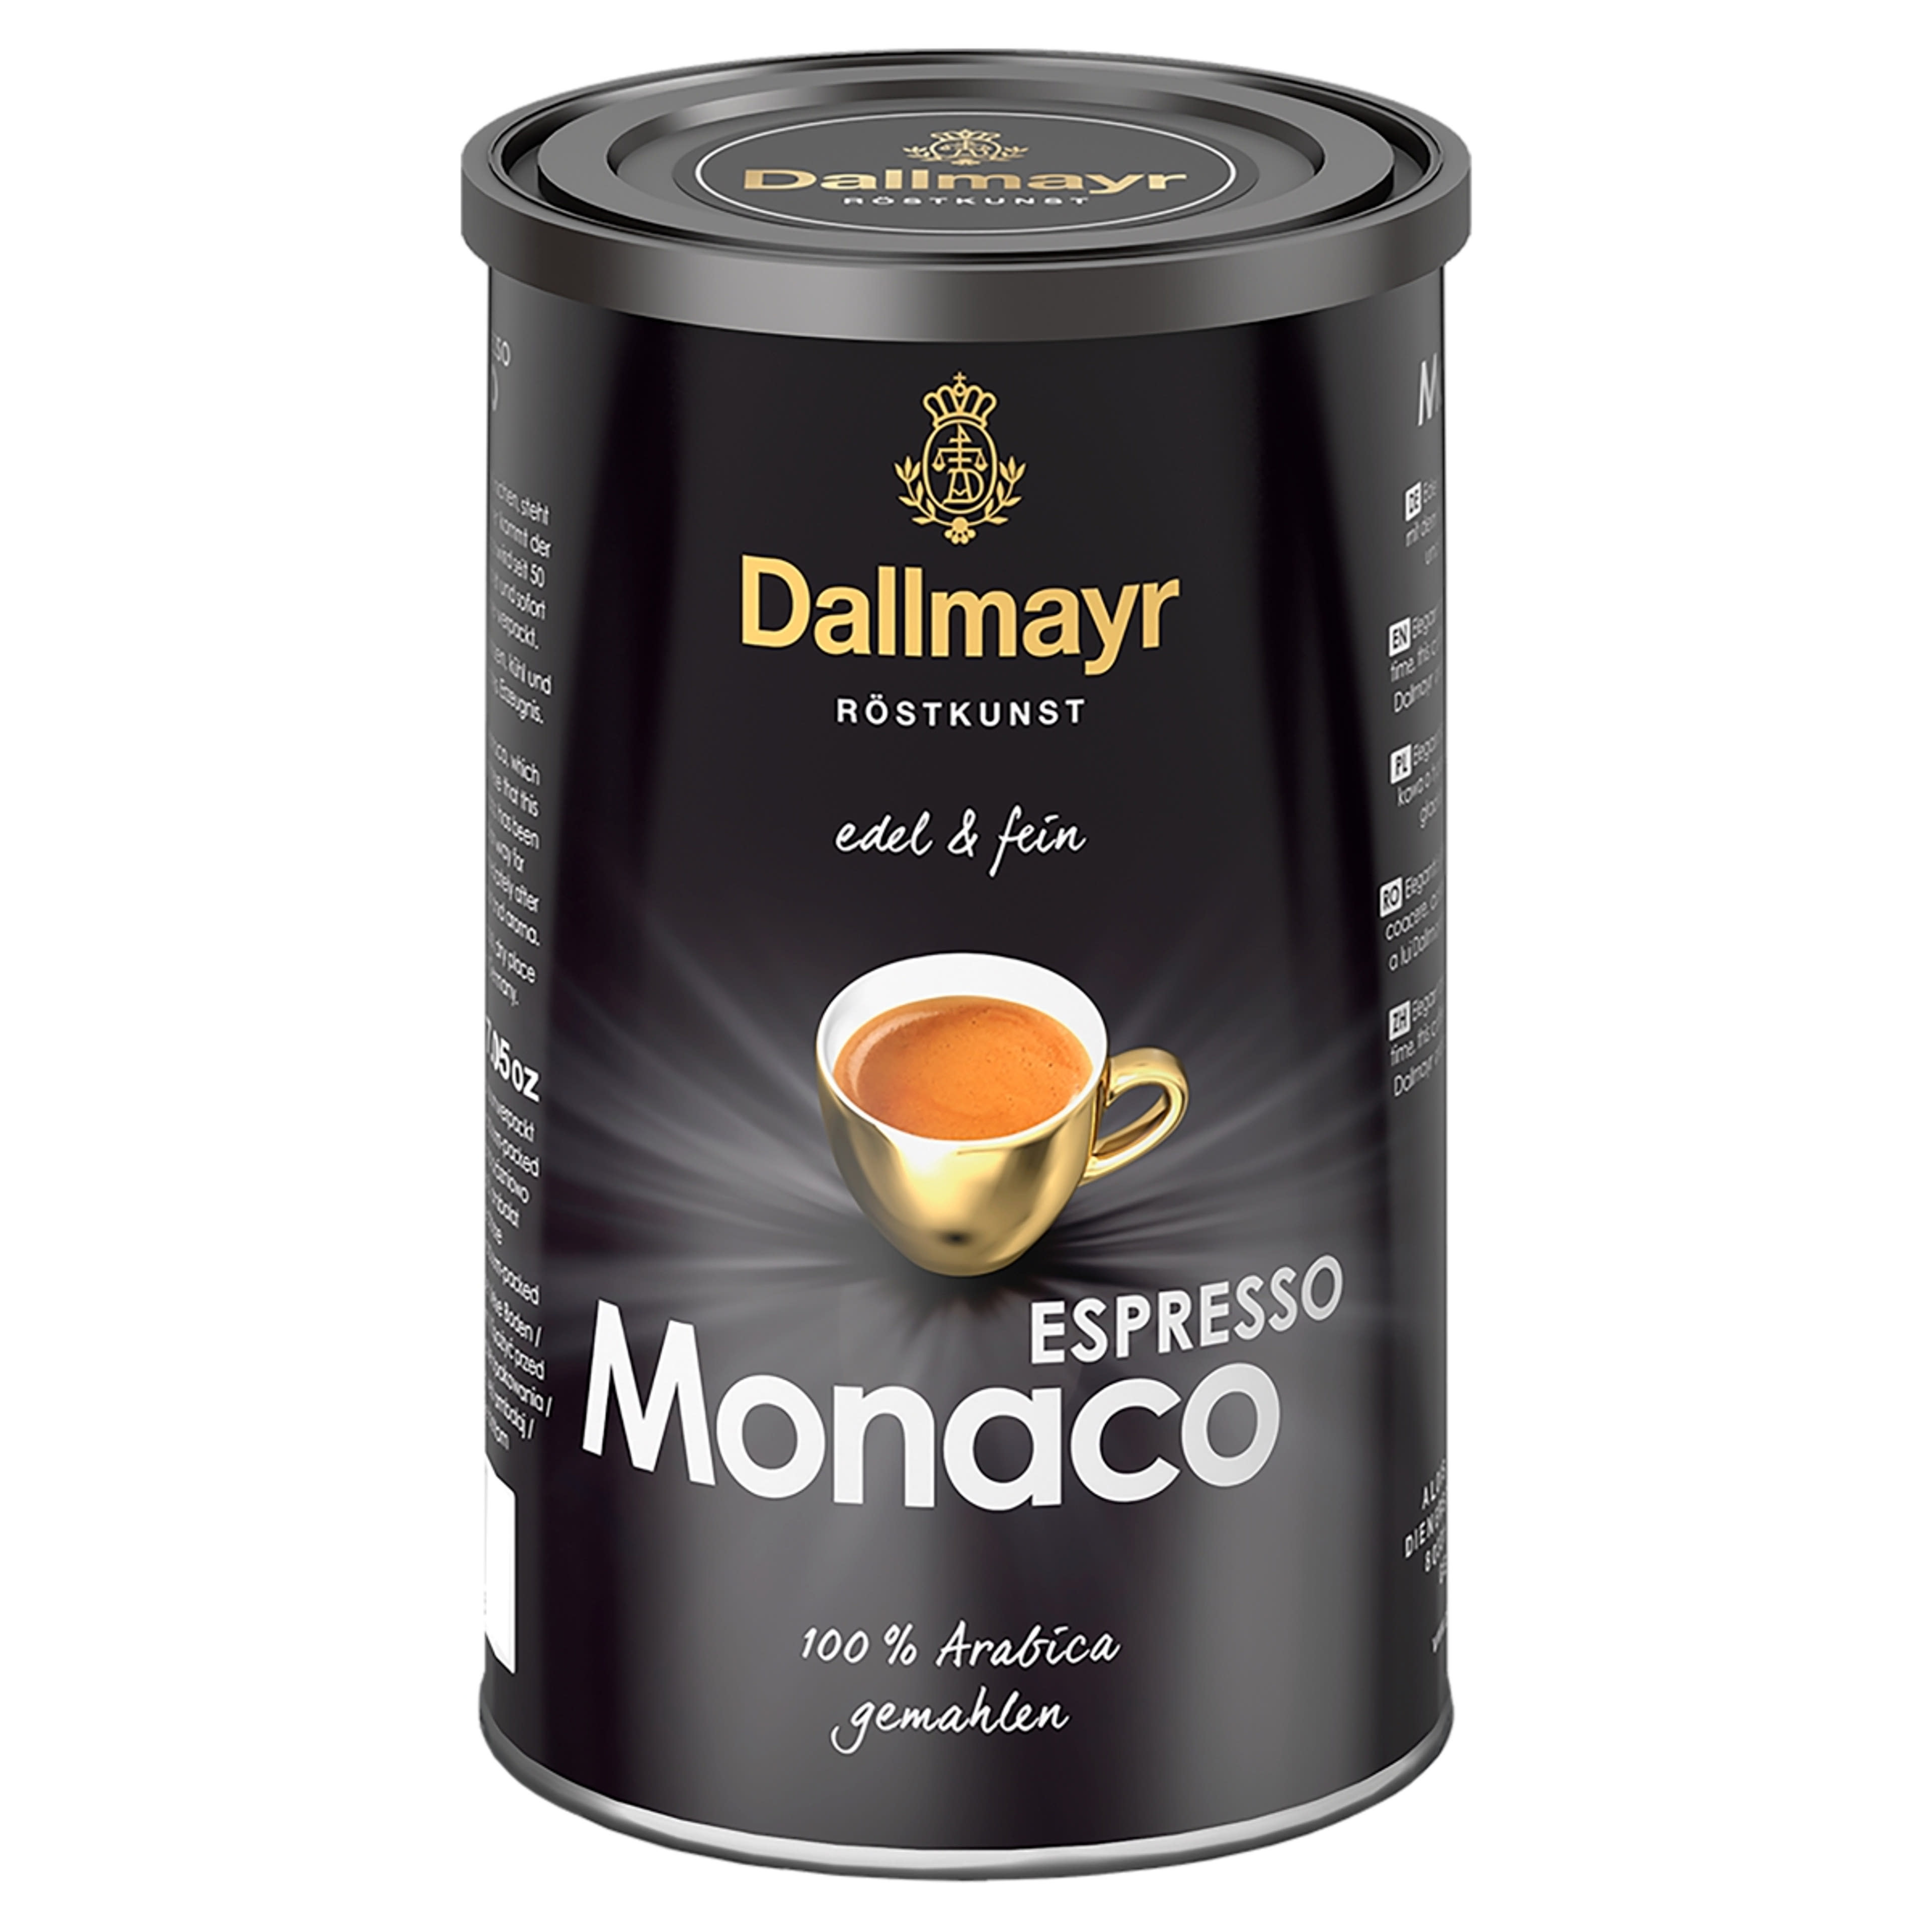 Dallmayr Espresso Monaco őrölt kávé - 200 g